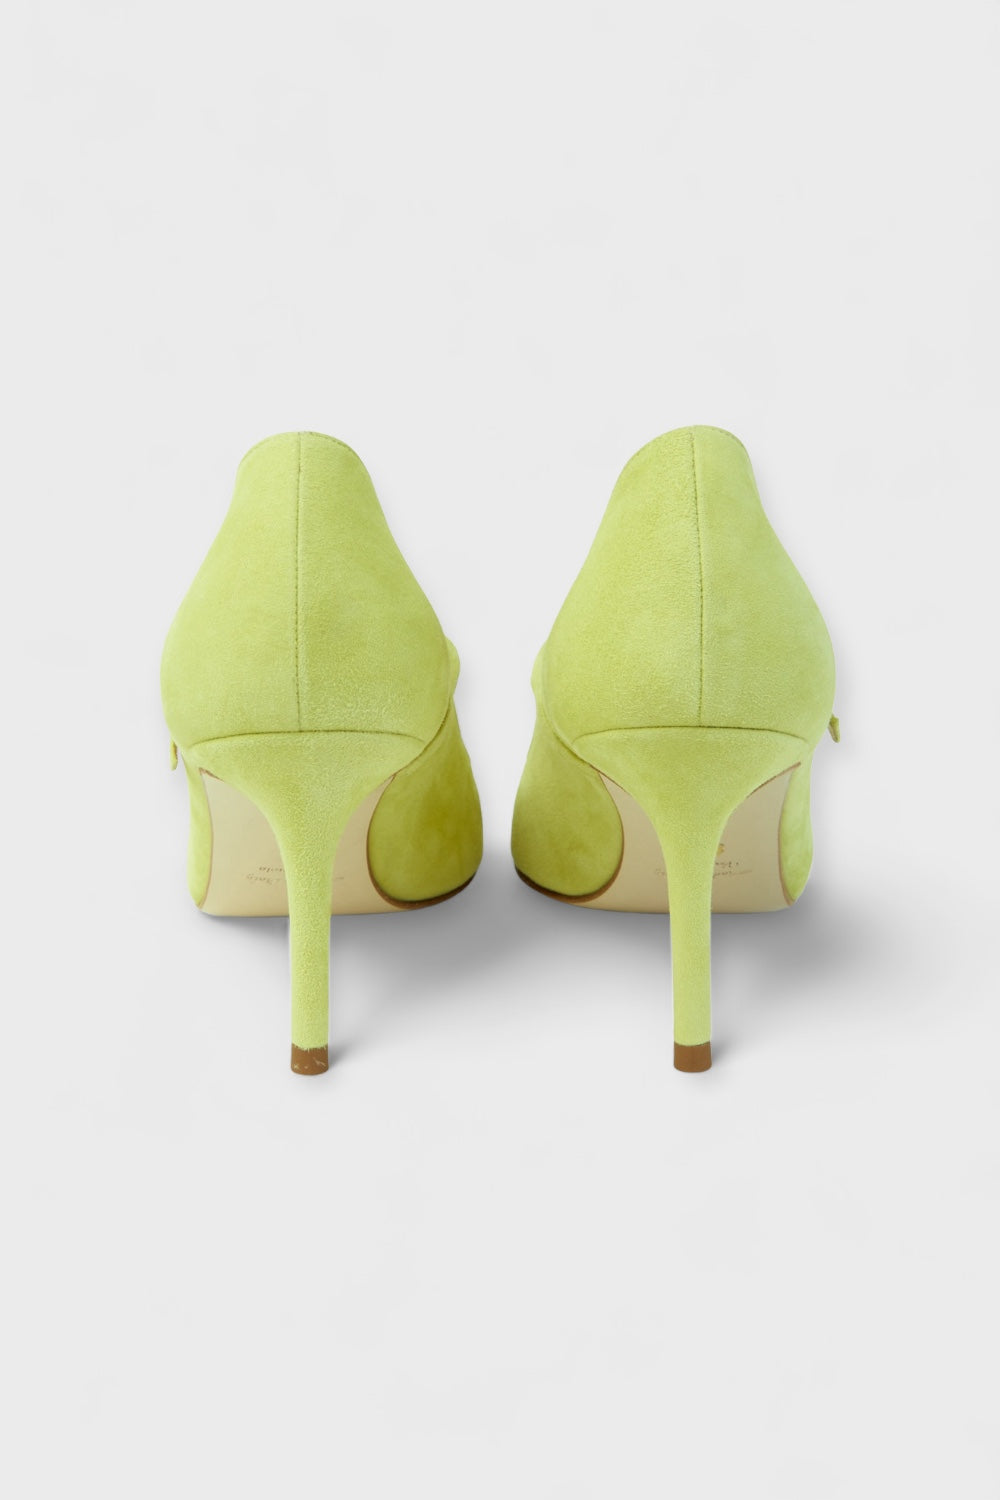 Mary Jane Green Suede Pumps by Danilo di Lea Italian Women's Shoes